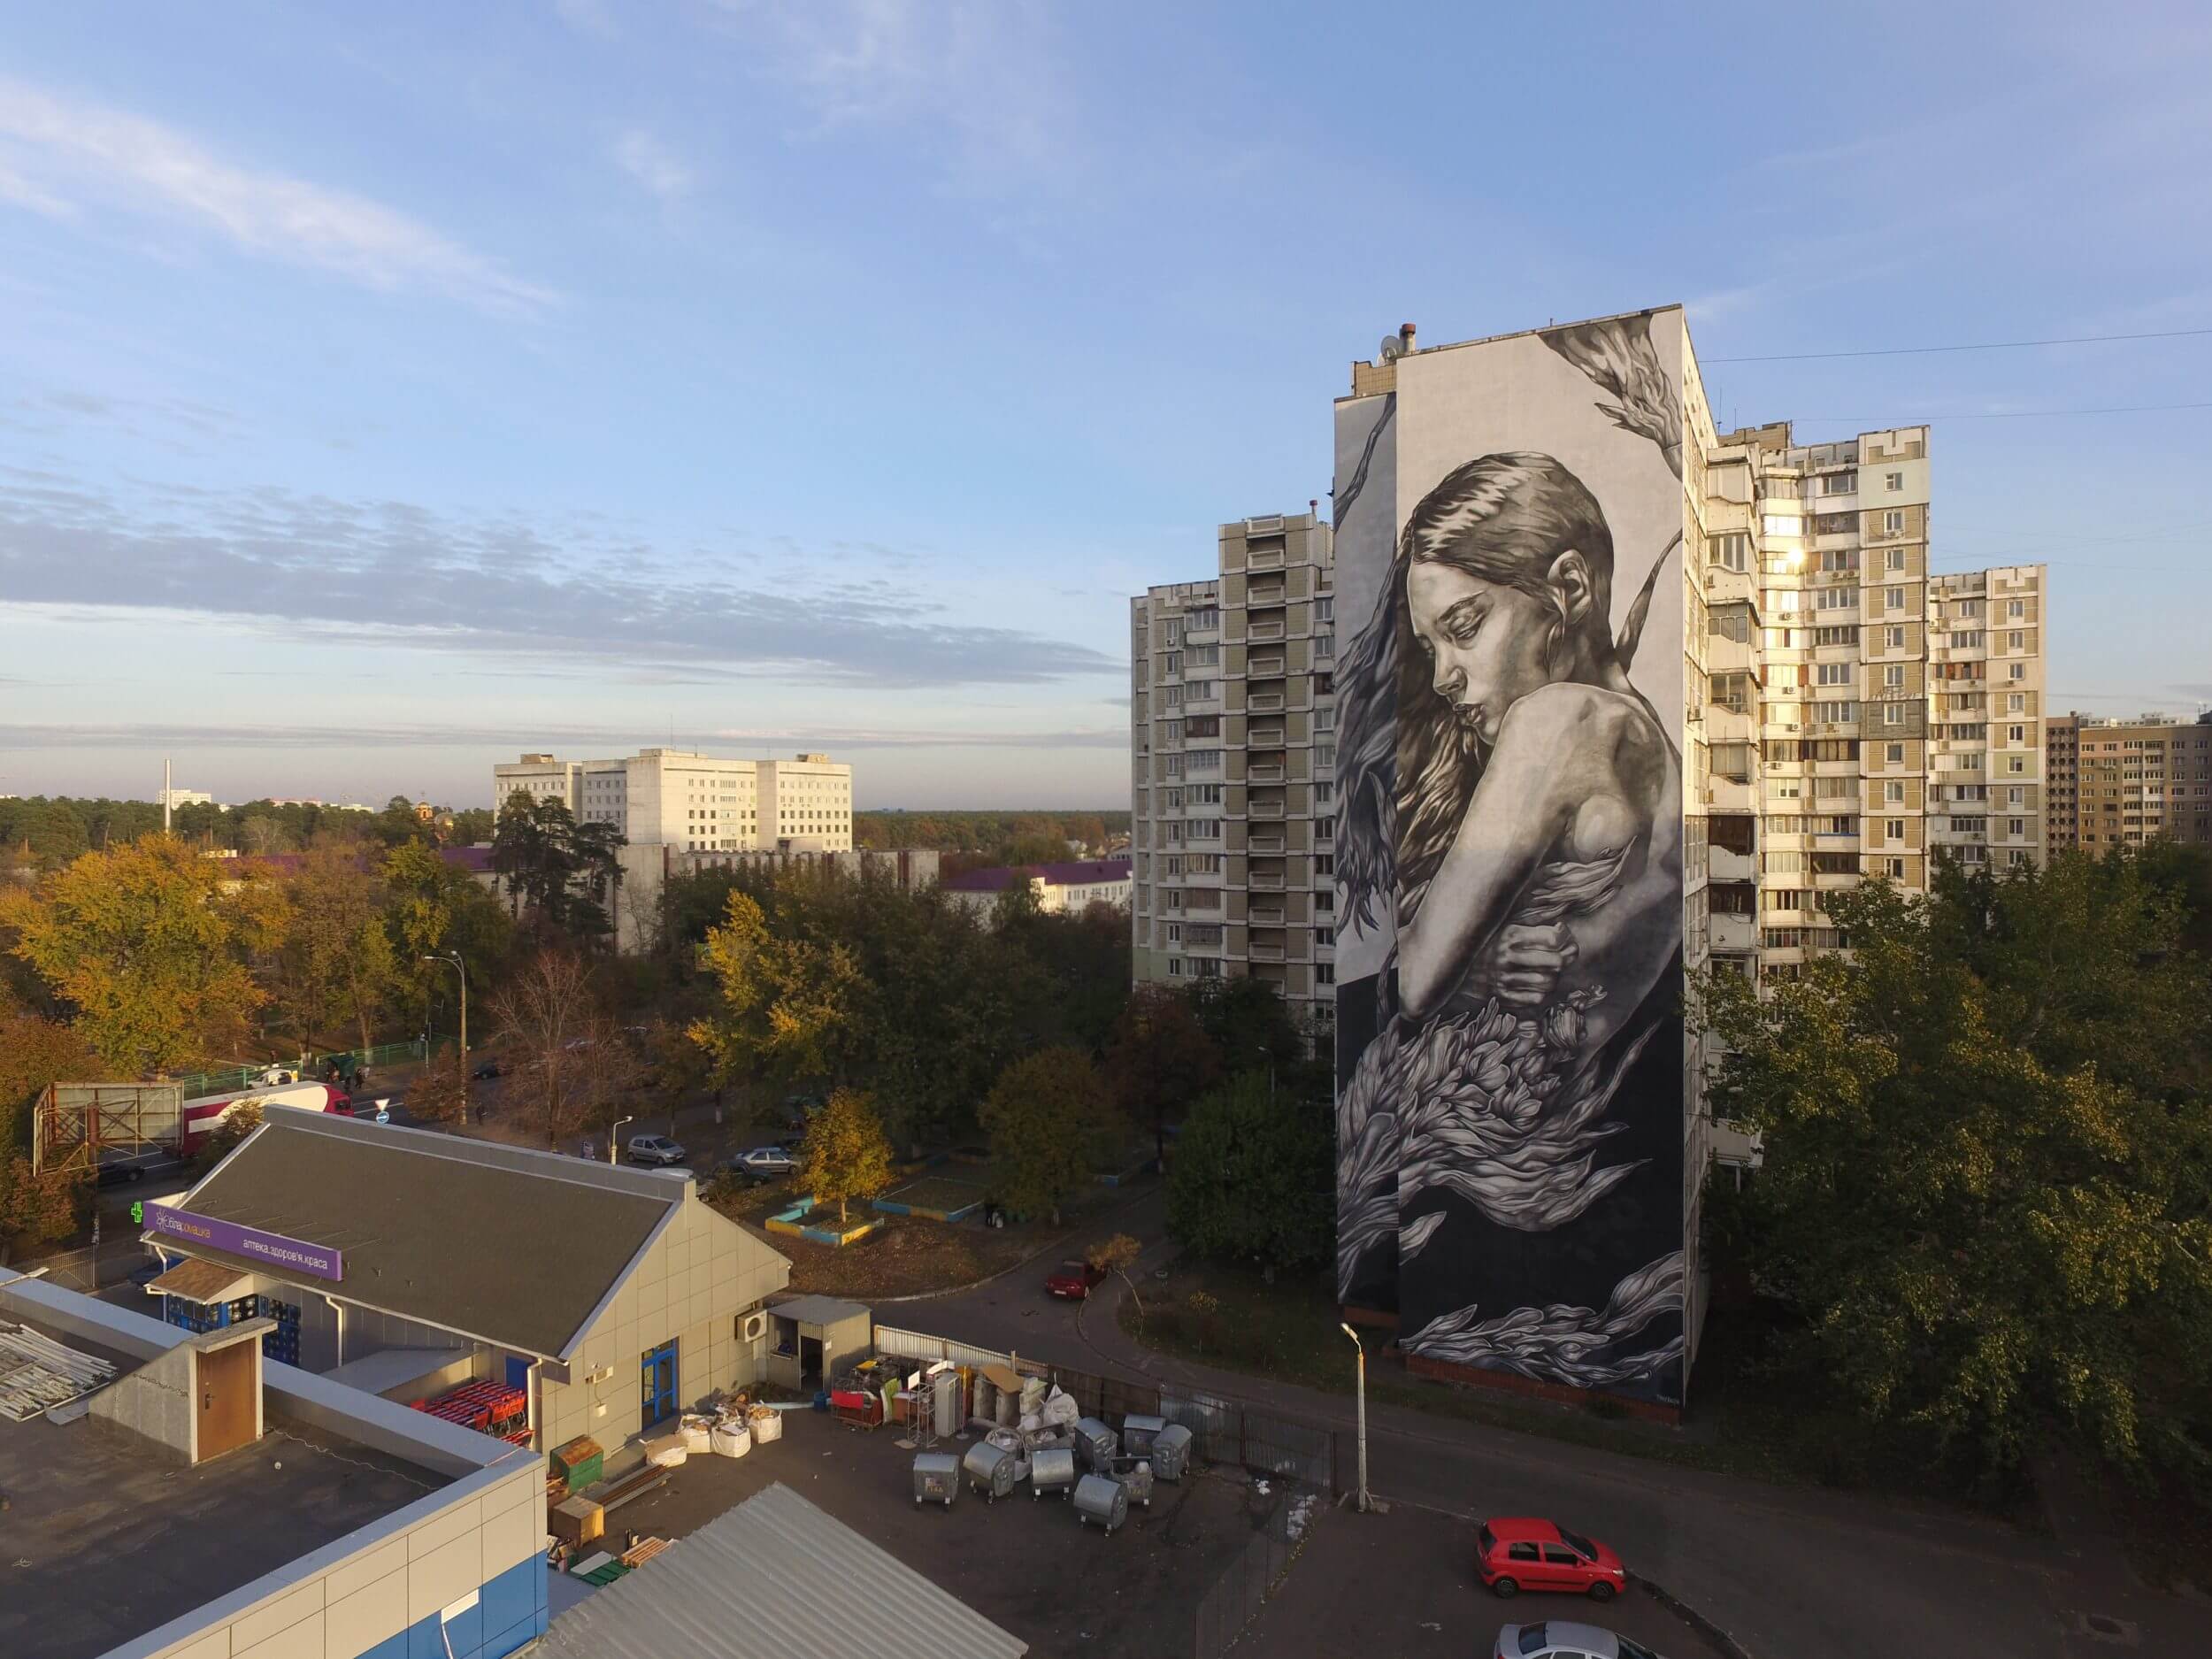 Street Artist Paola Delfin finds shelter in Kiev, Ukraine 2016